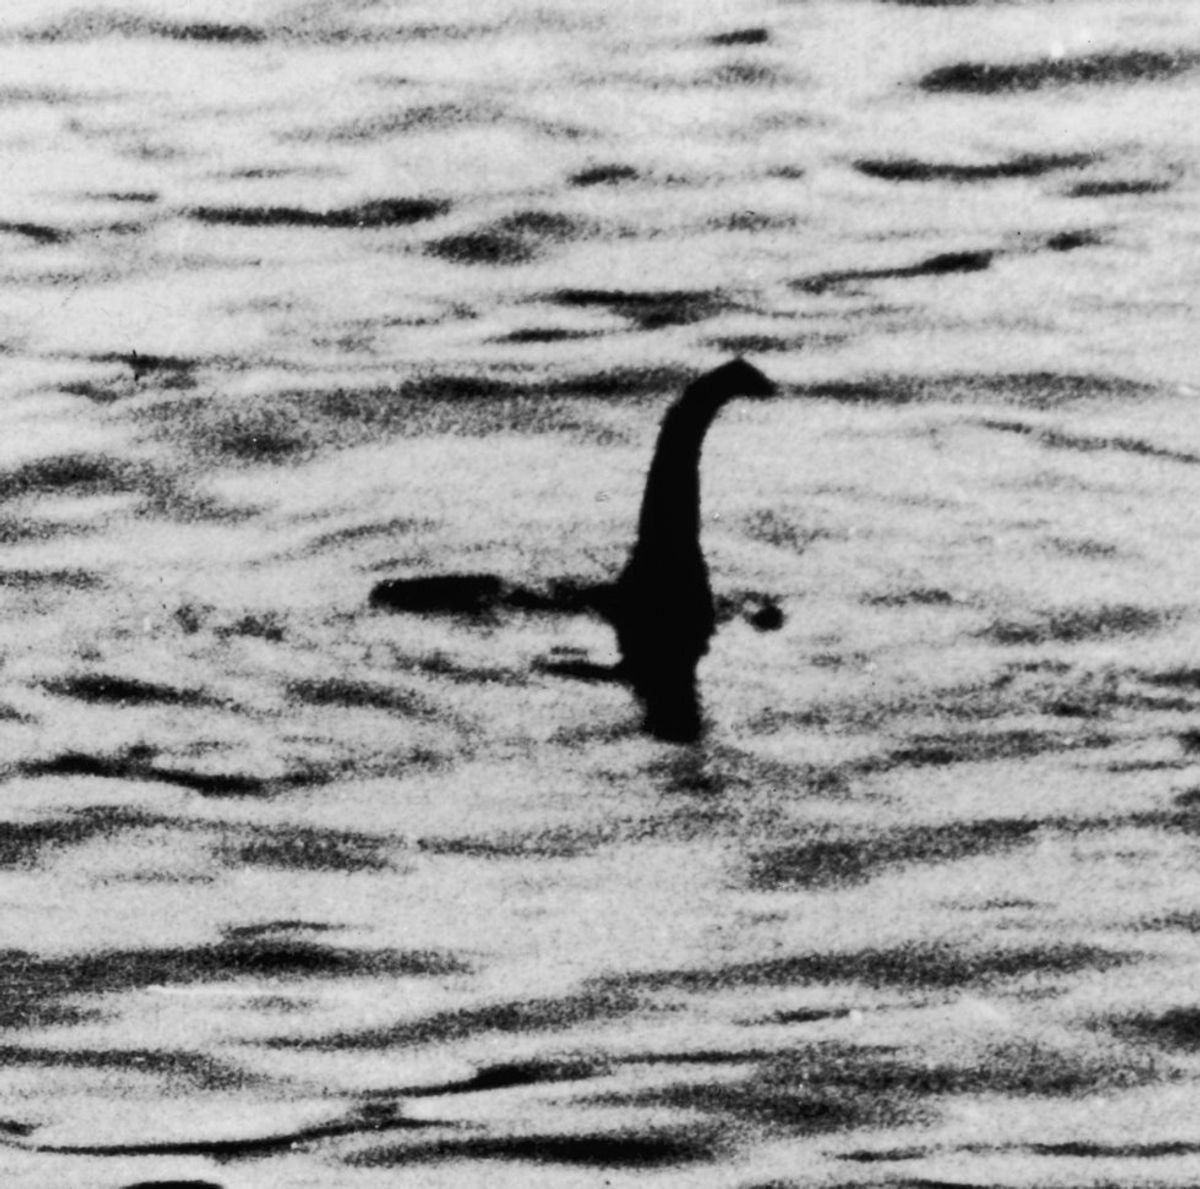 The Loch Ness Monster Finally Found?